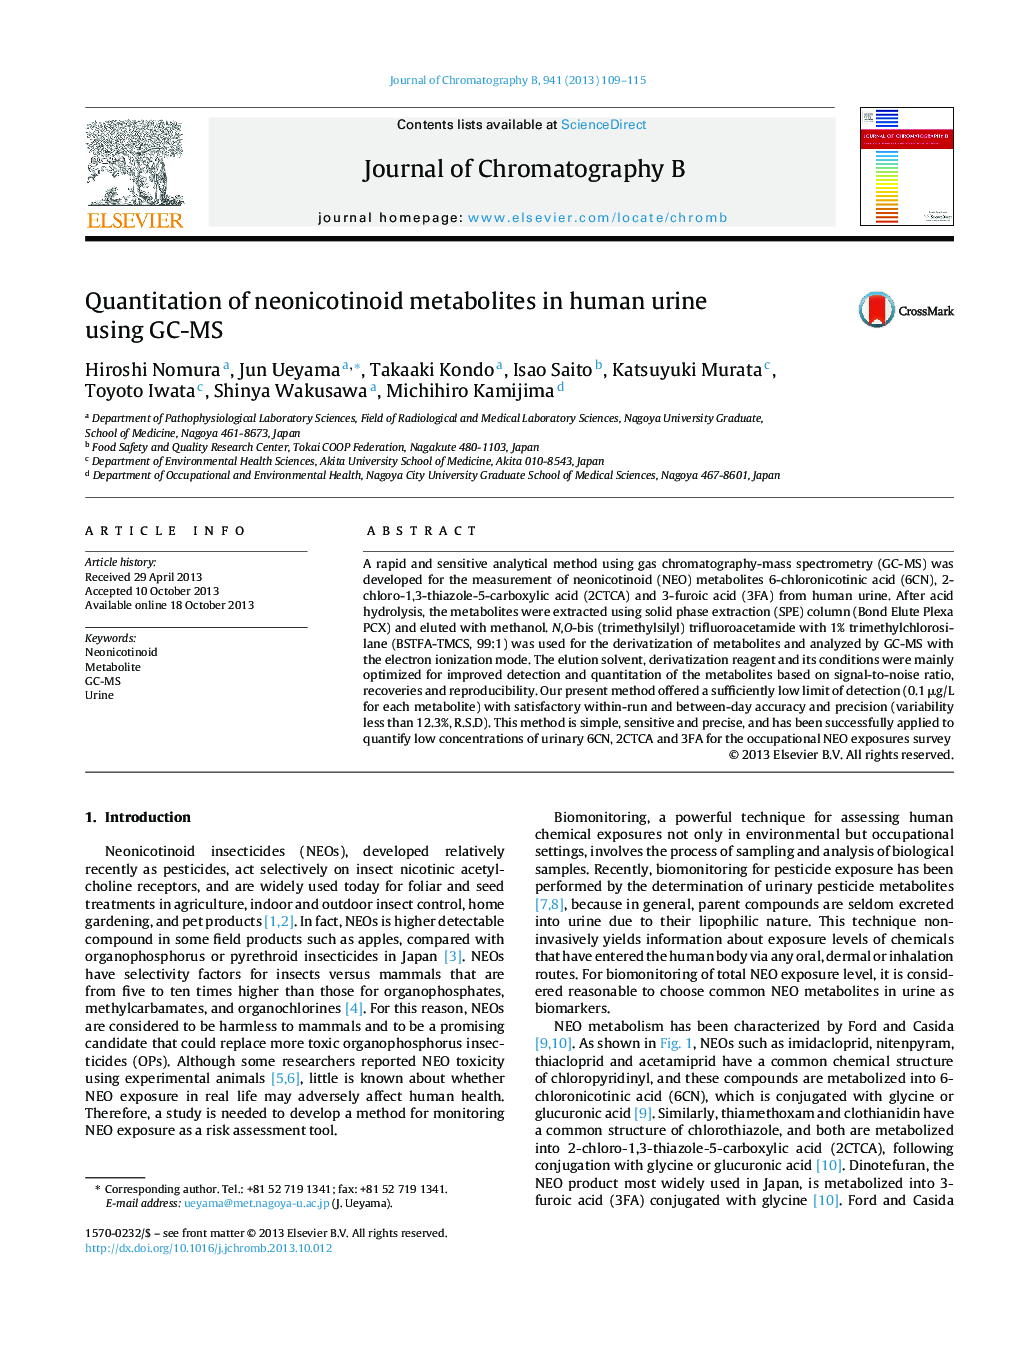 Quantitation of neonicotinoid metabolites in human urine using GC-MS